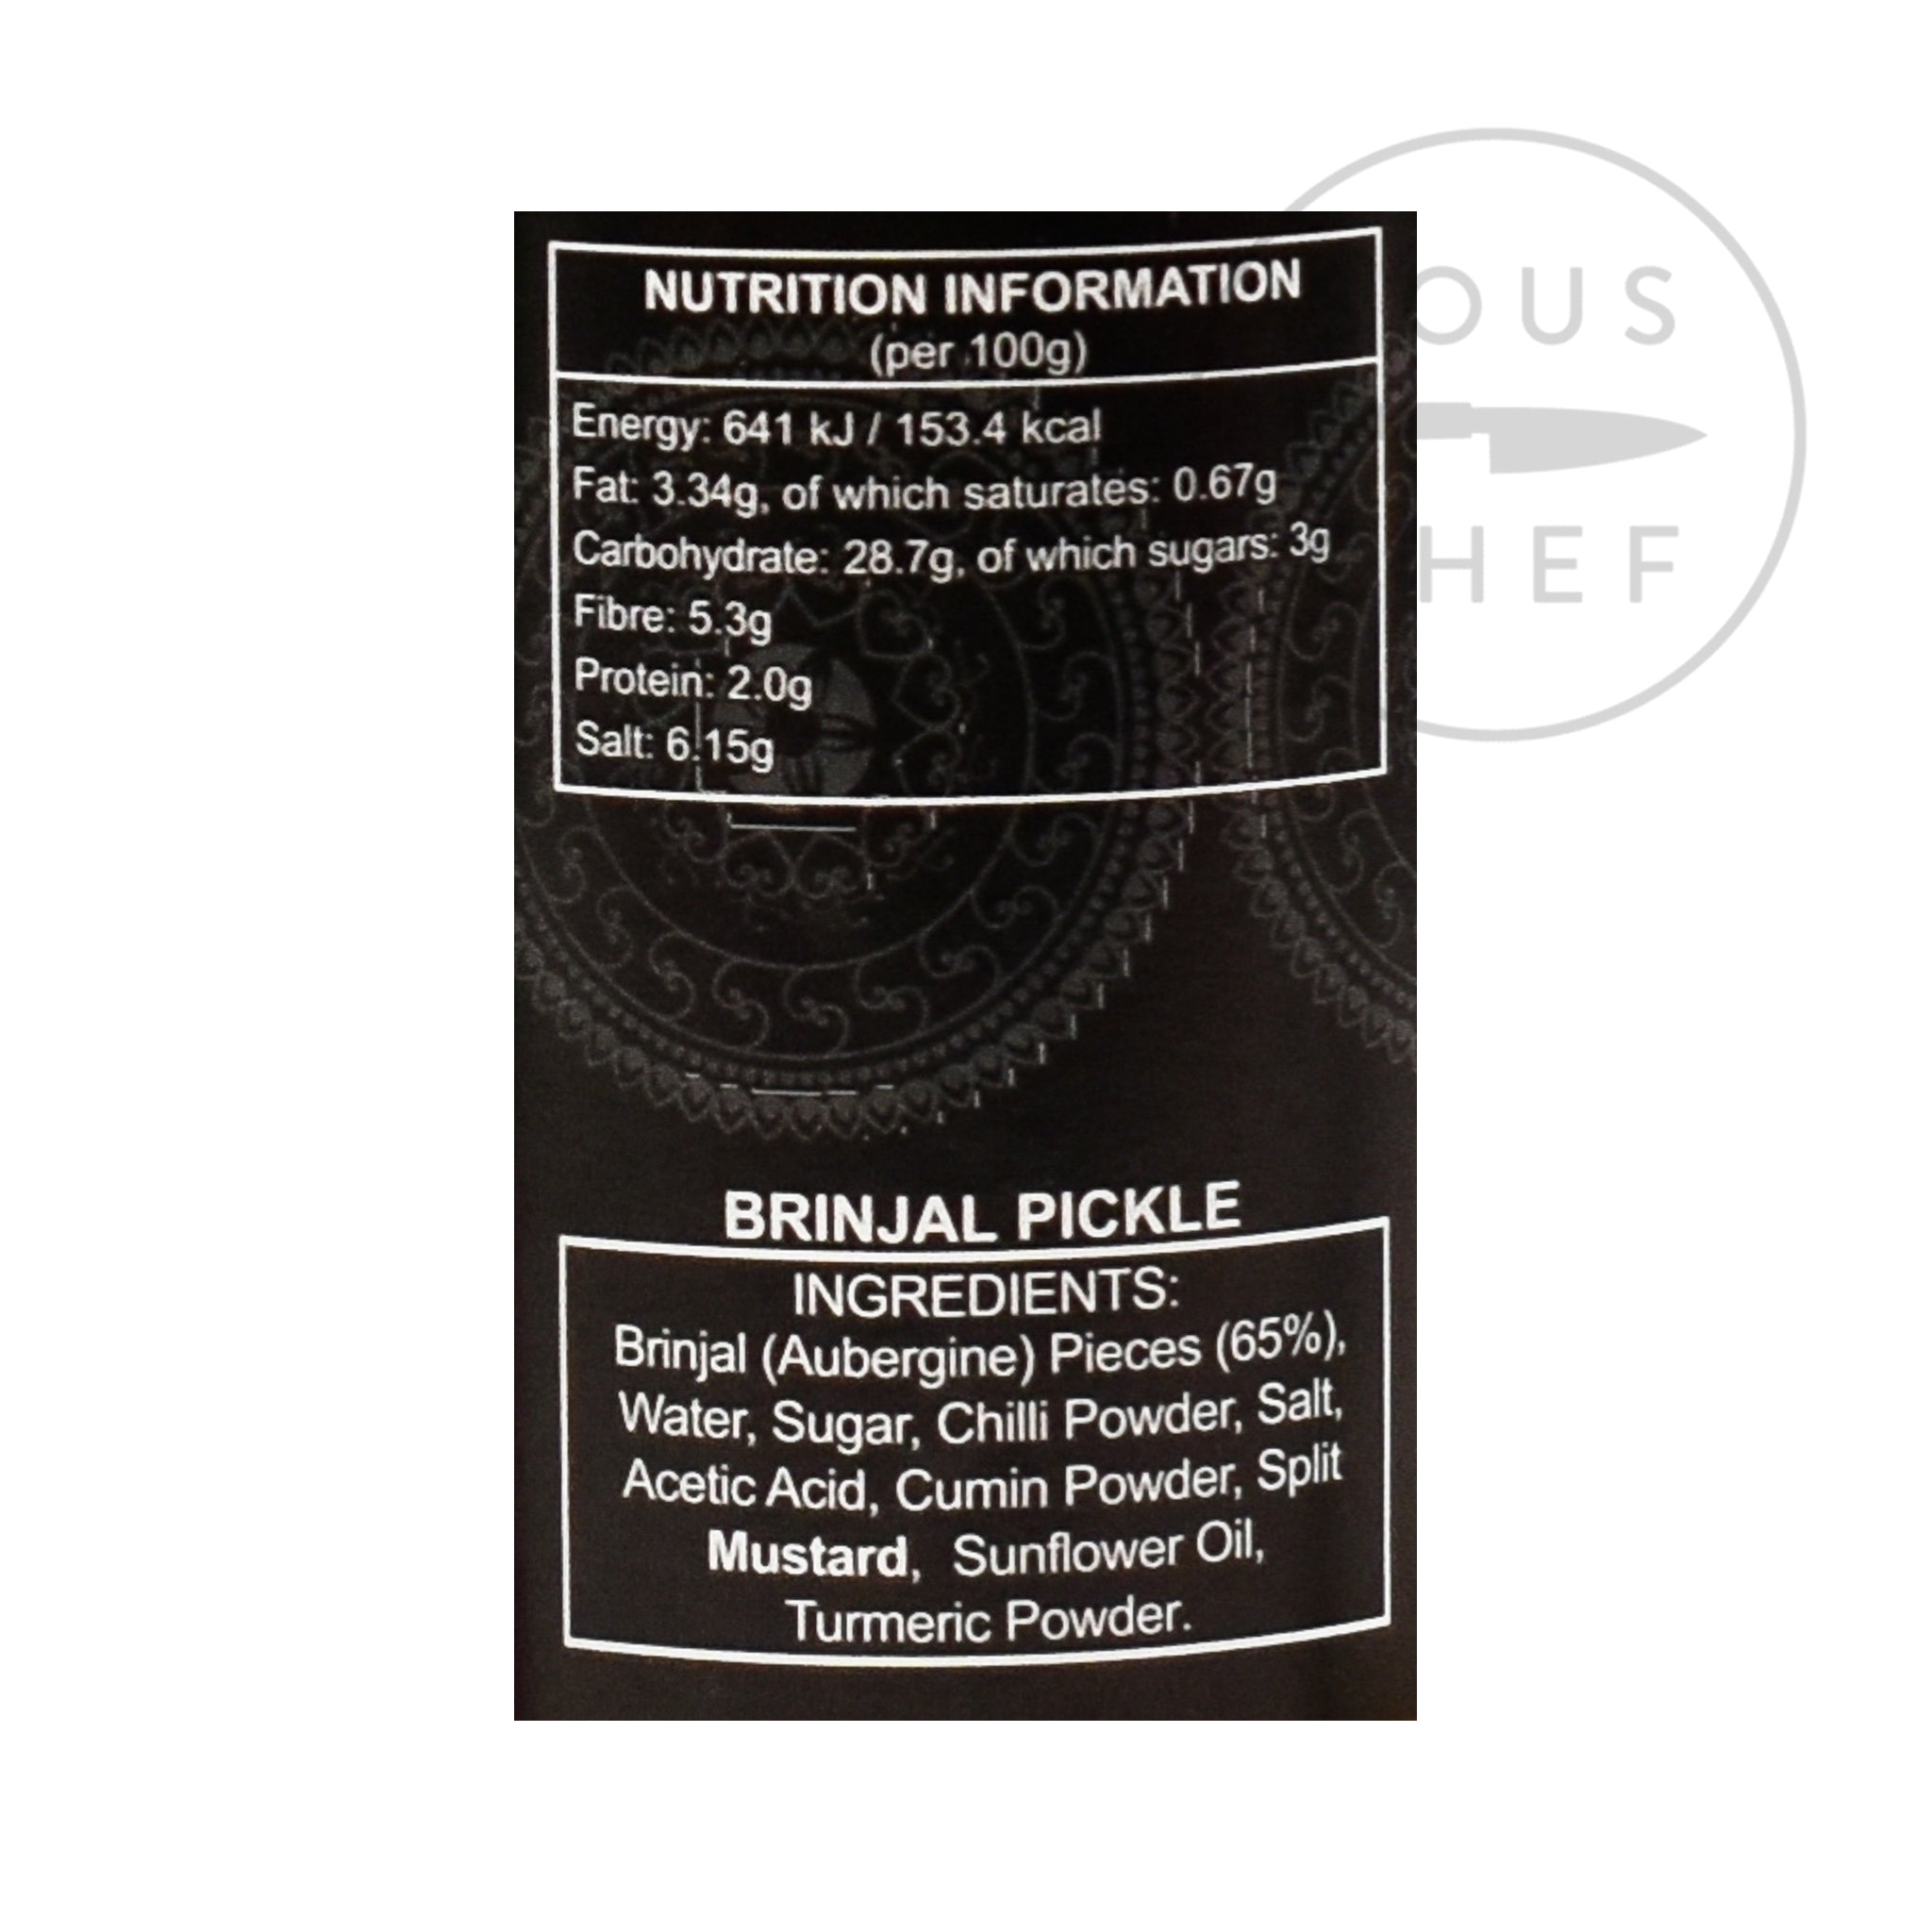 Ferns' Brinjal Pickle 380g nutritional information ingredients